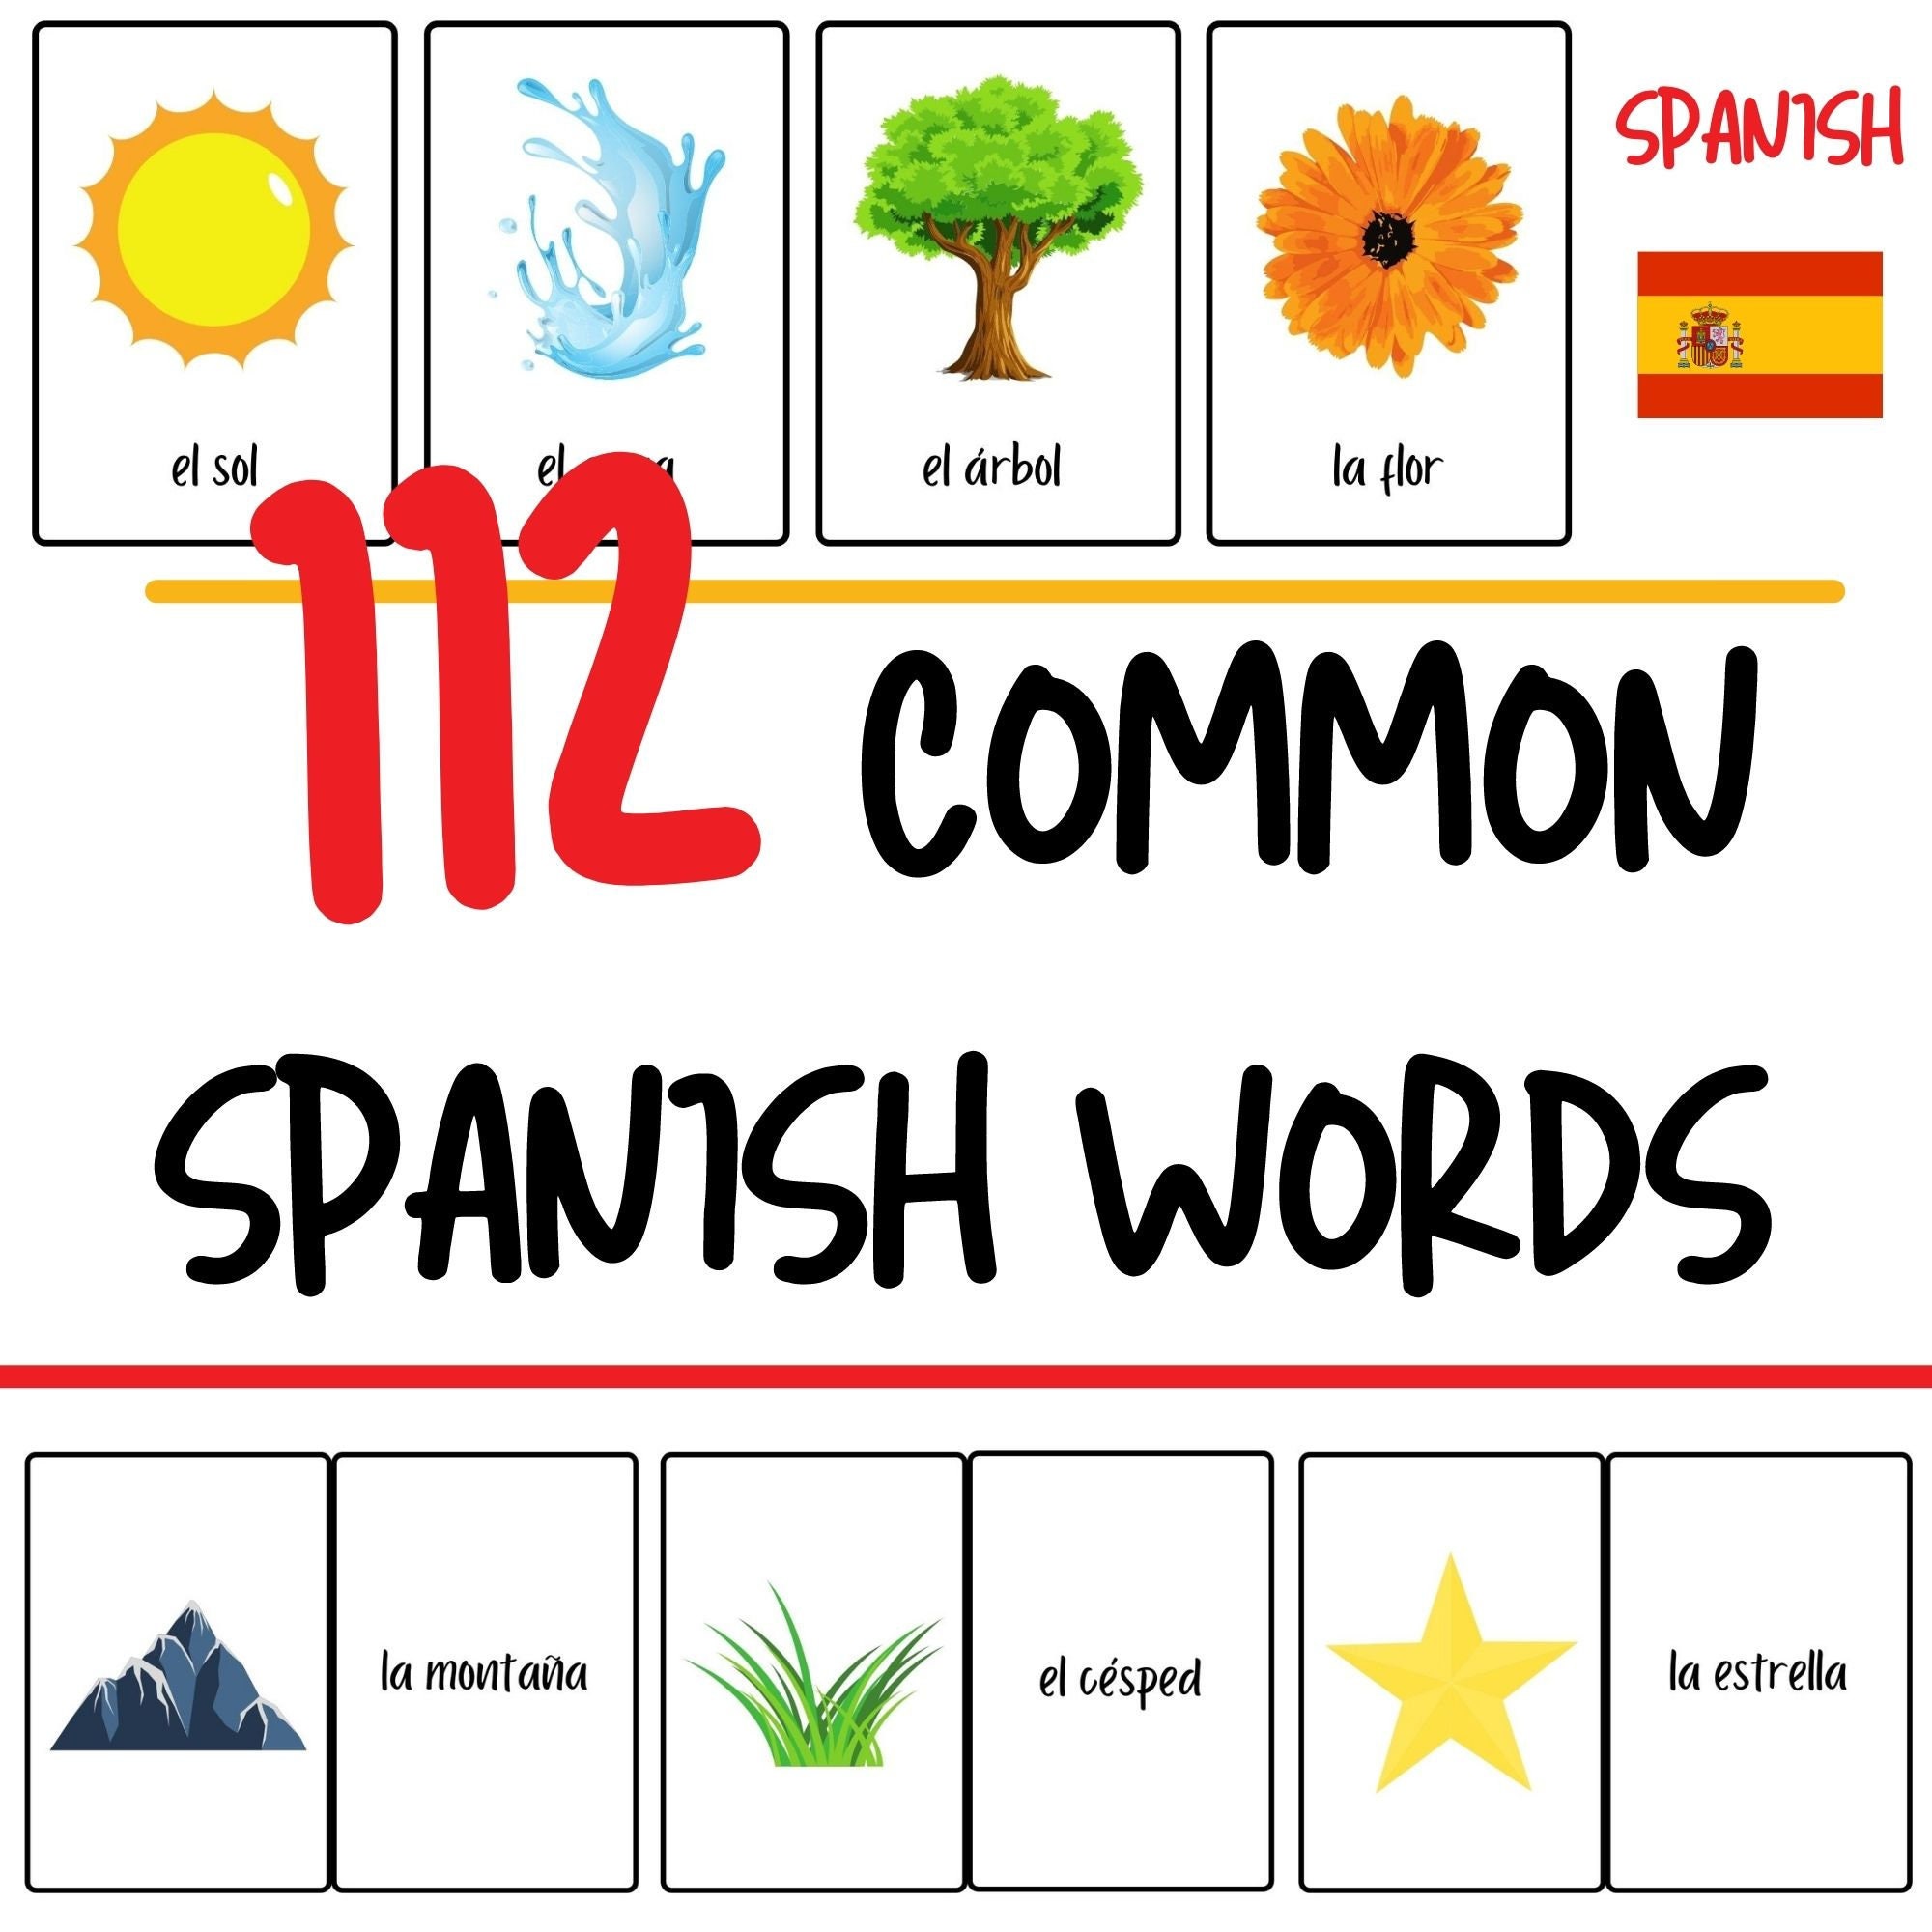 Spanish Flashcards 112 Common Spanish Words Spanish For Beginners